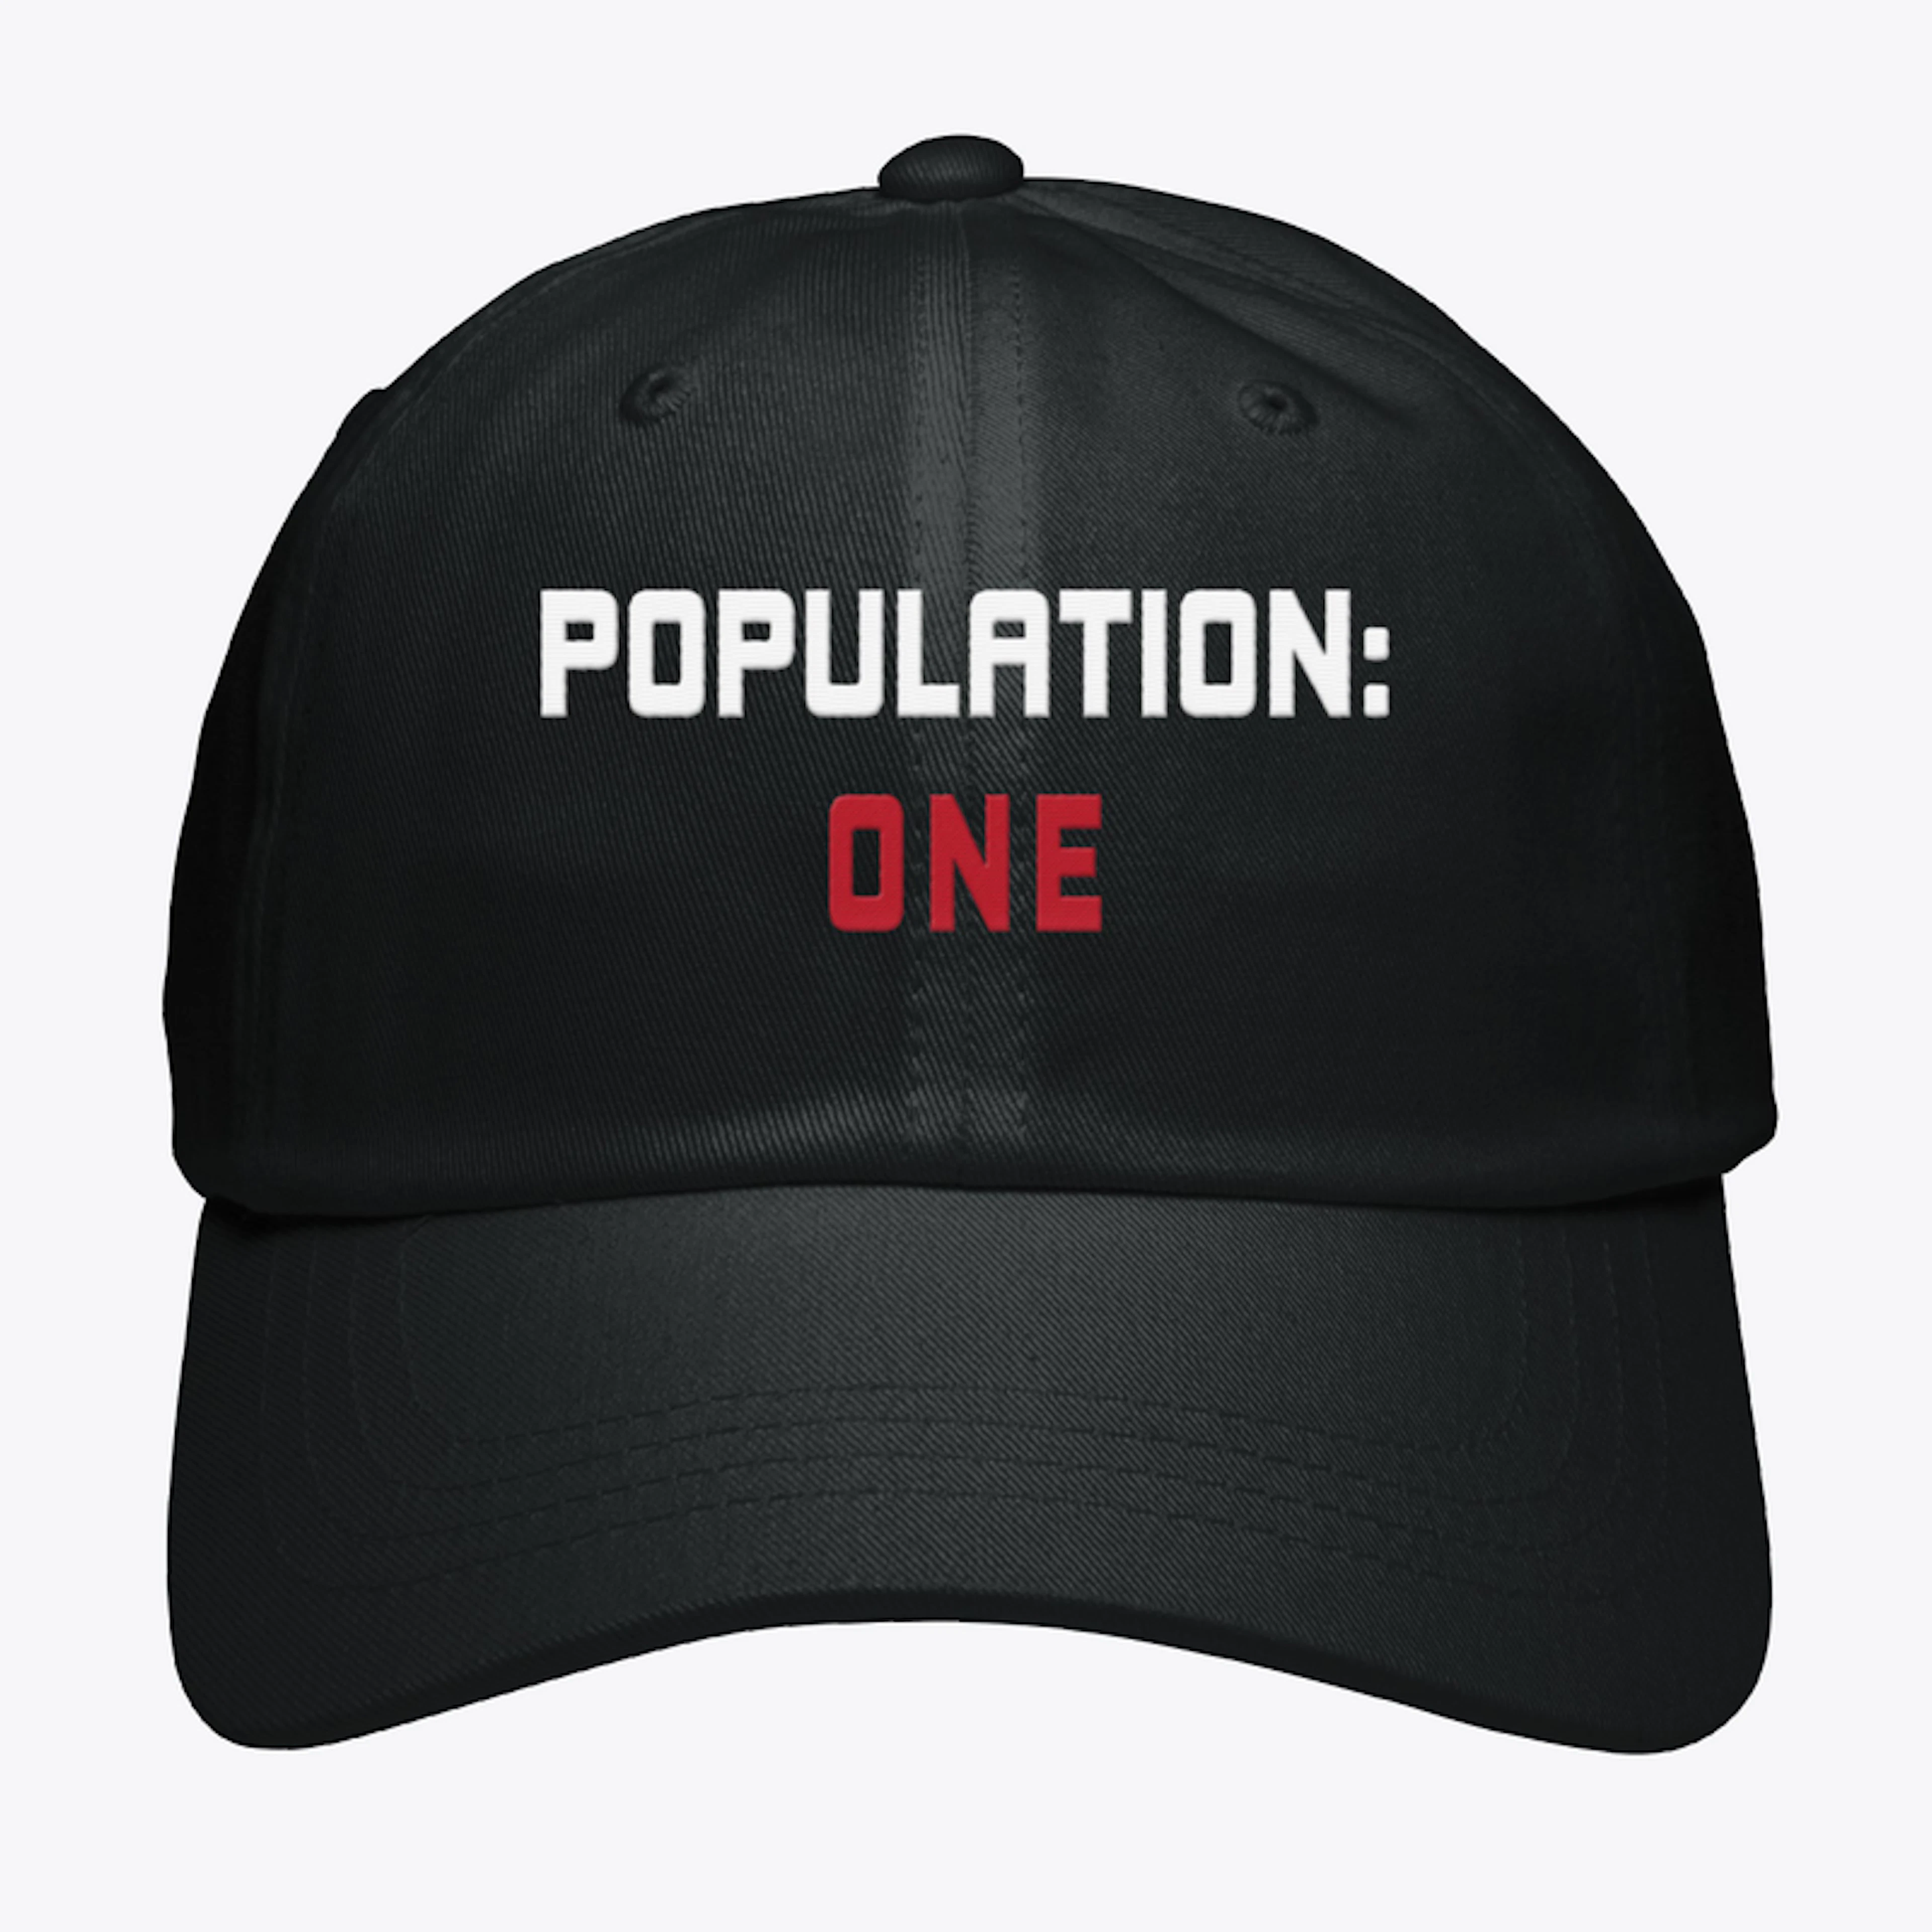 Population one Hat classic